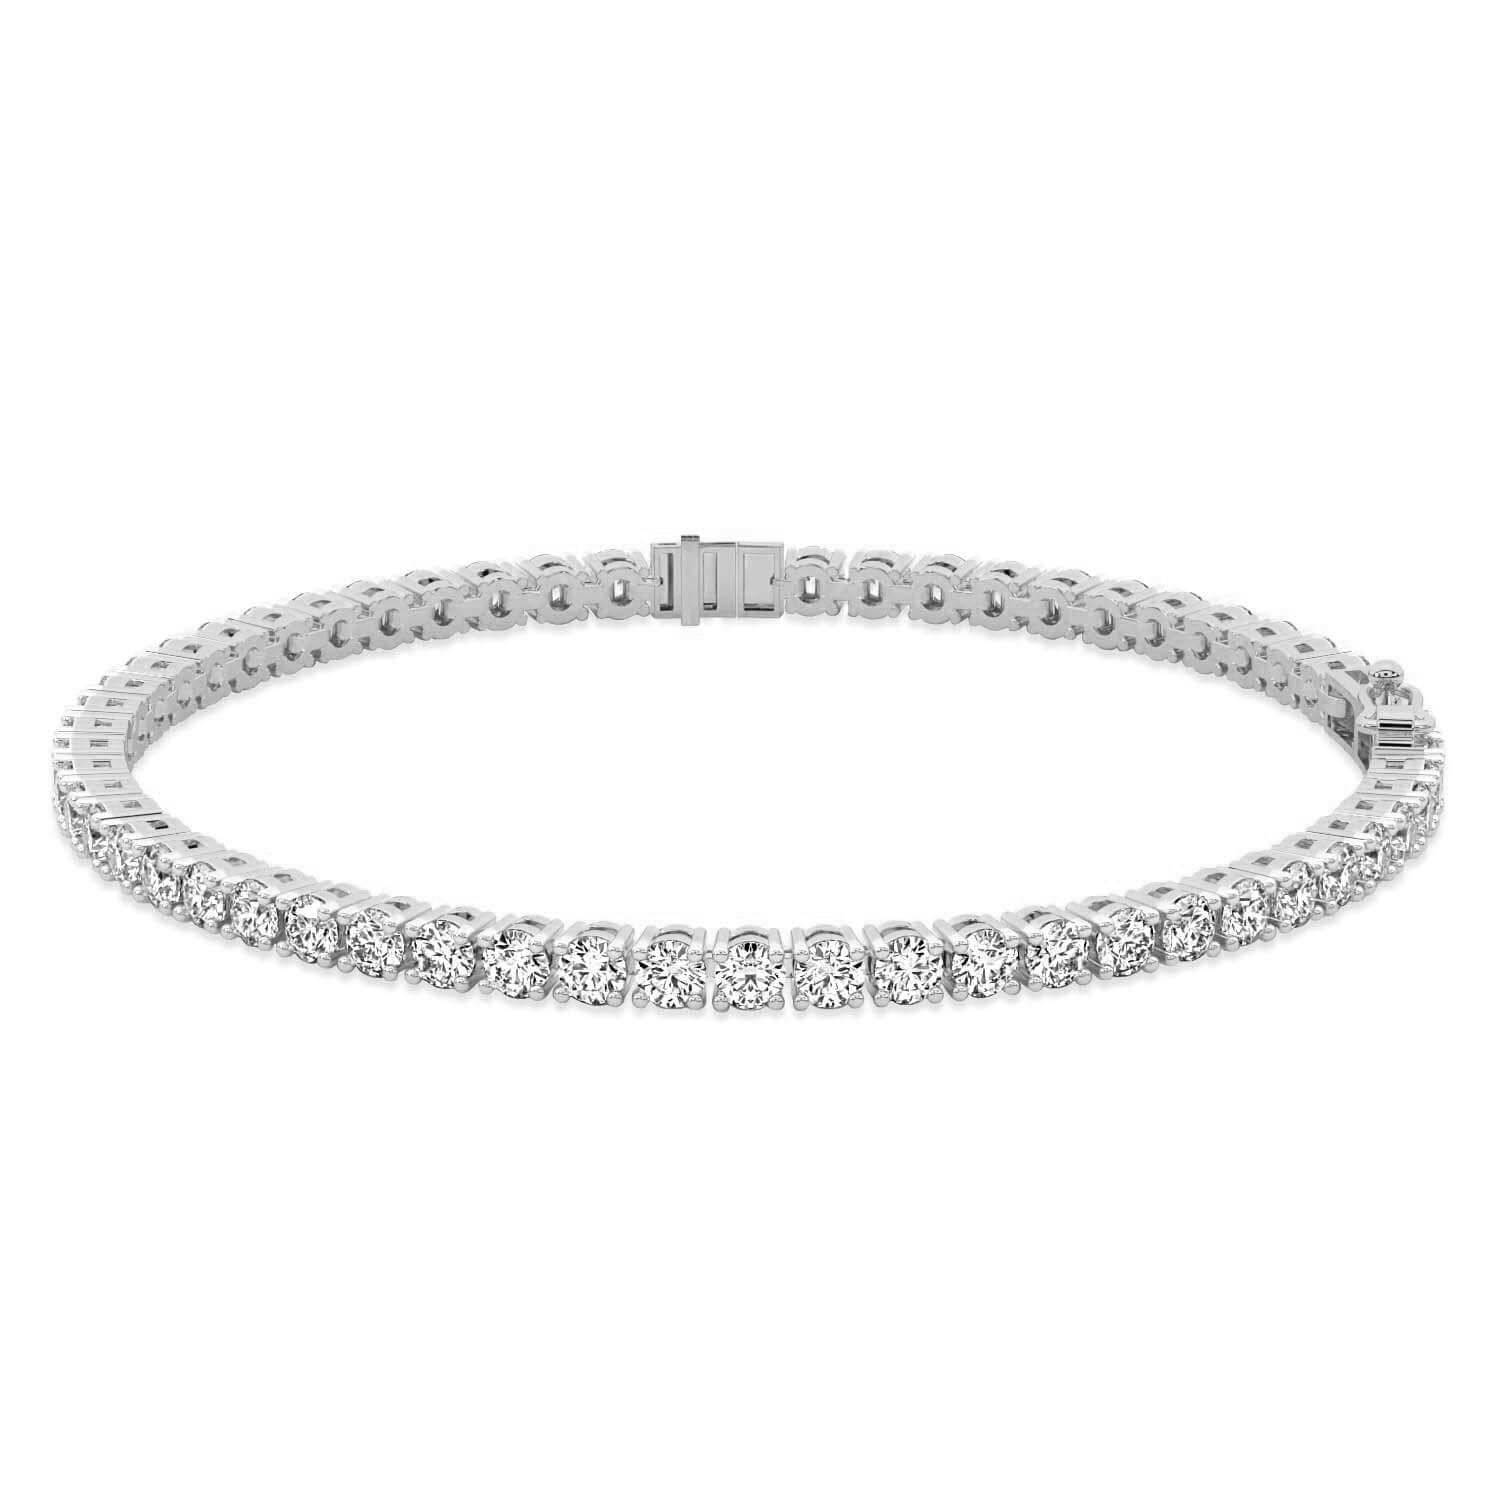 Darcy Round Lab Diamond Tennis Bracelet white gold bracelet, small front view